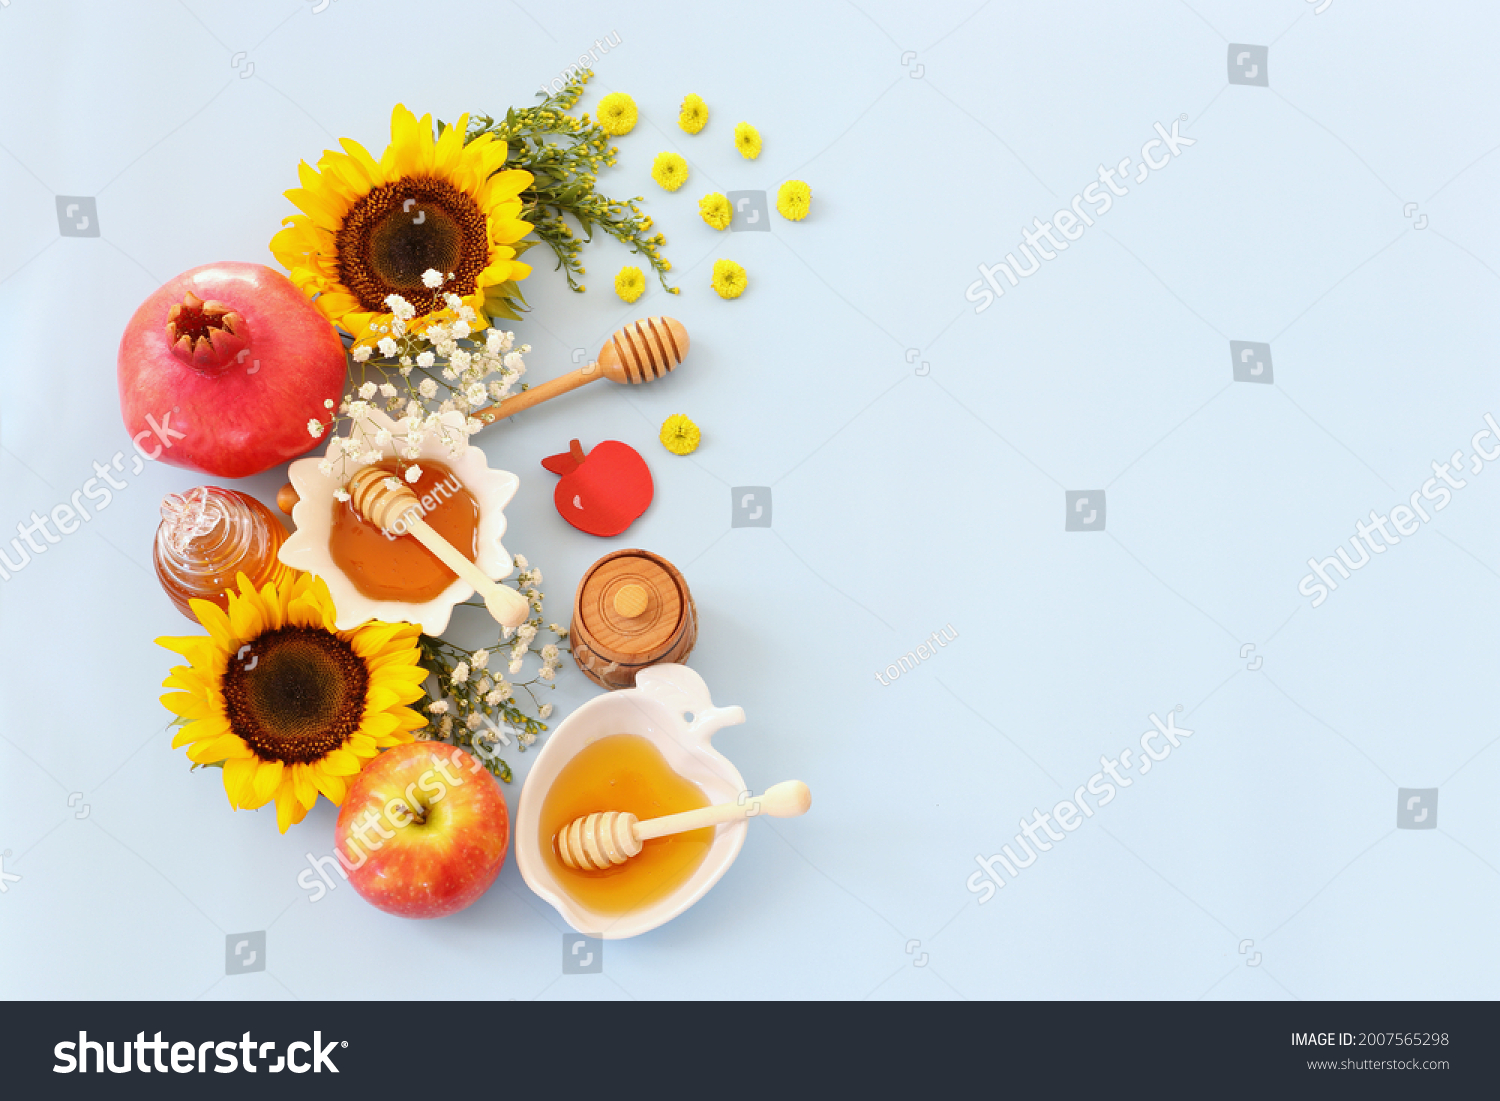 honey, pomegranate and apple. Rosh hashanah (jewish New Year holiday) concept. Traditional symbol #2007565298